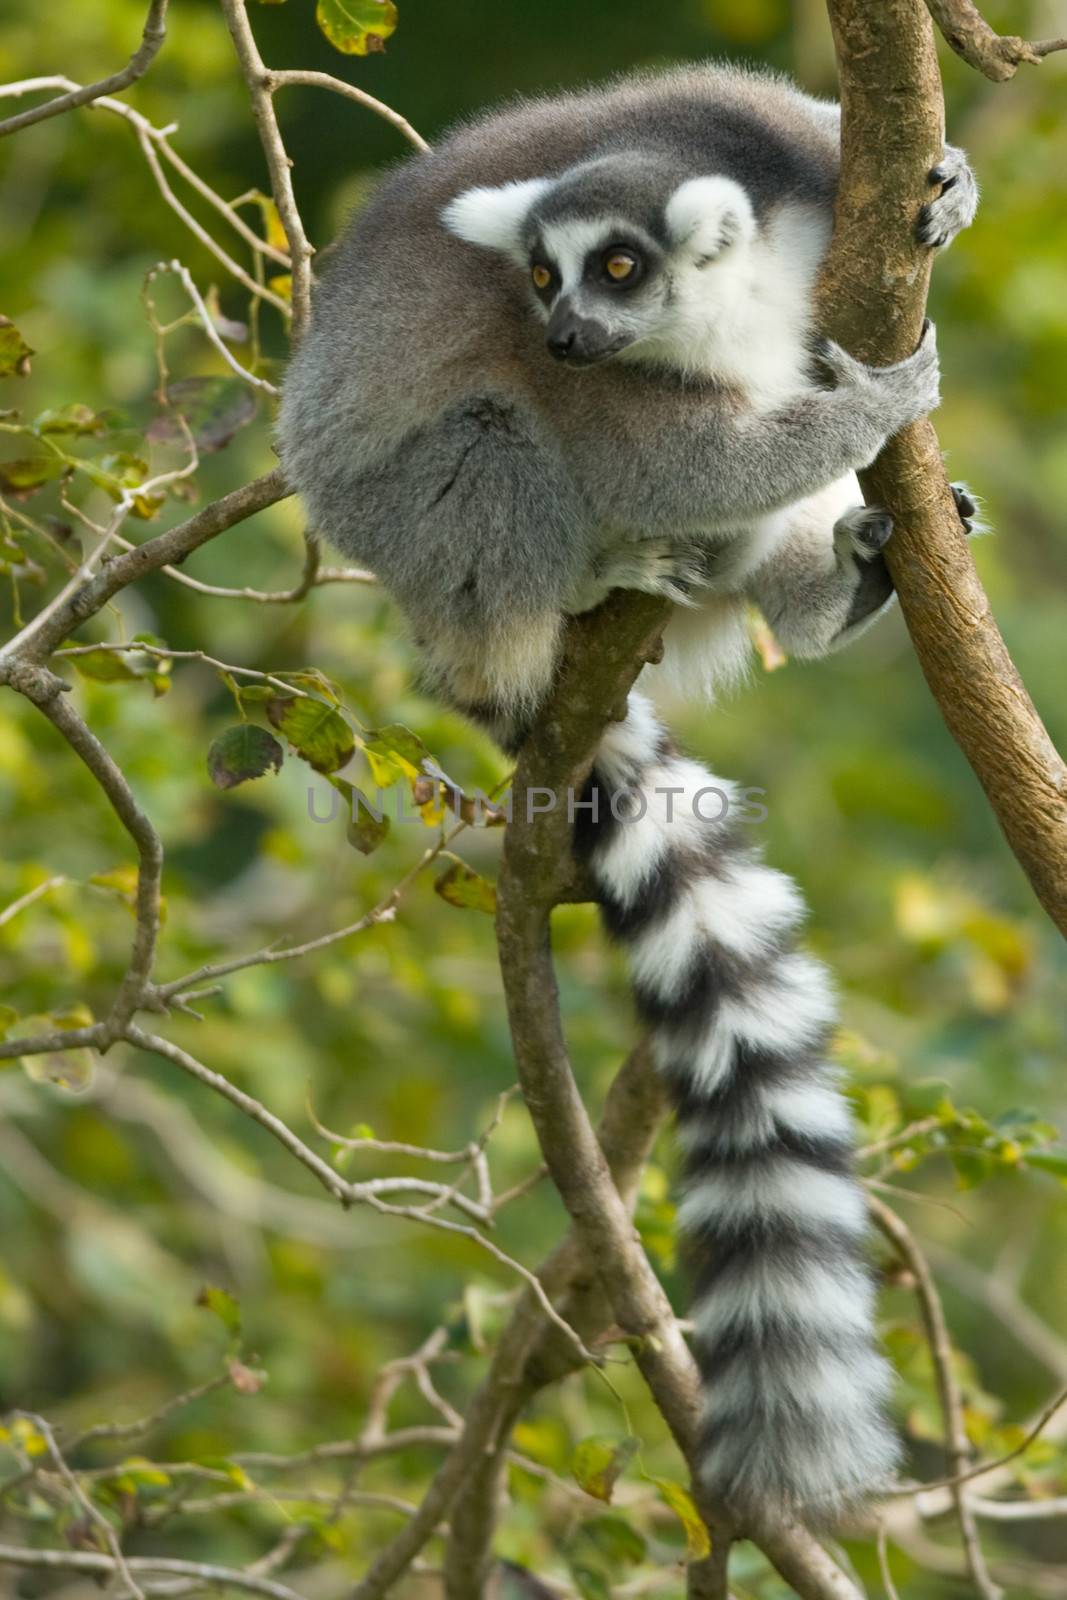 Little lemur hanging on a branch, Miami, Florida, USA